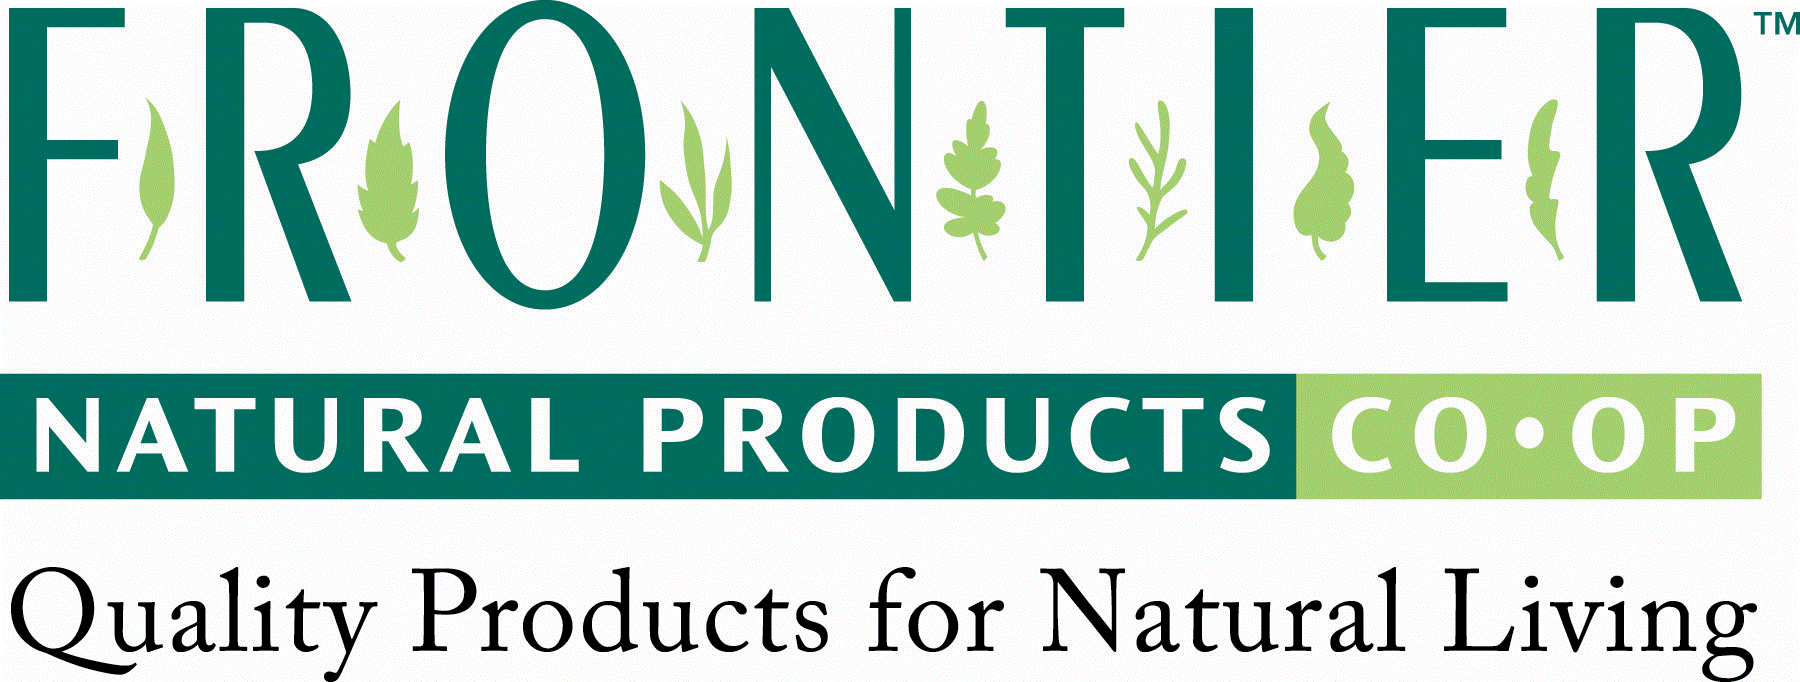 We live nature. Frontier co-op. Натурал продукт. Frontier логотип. Natural products.